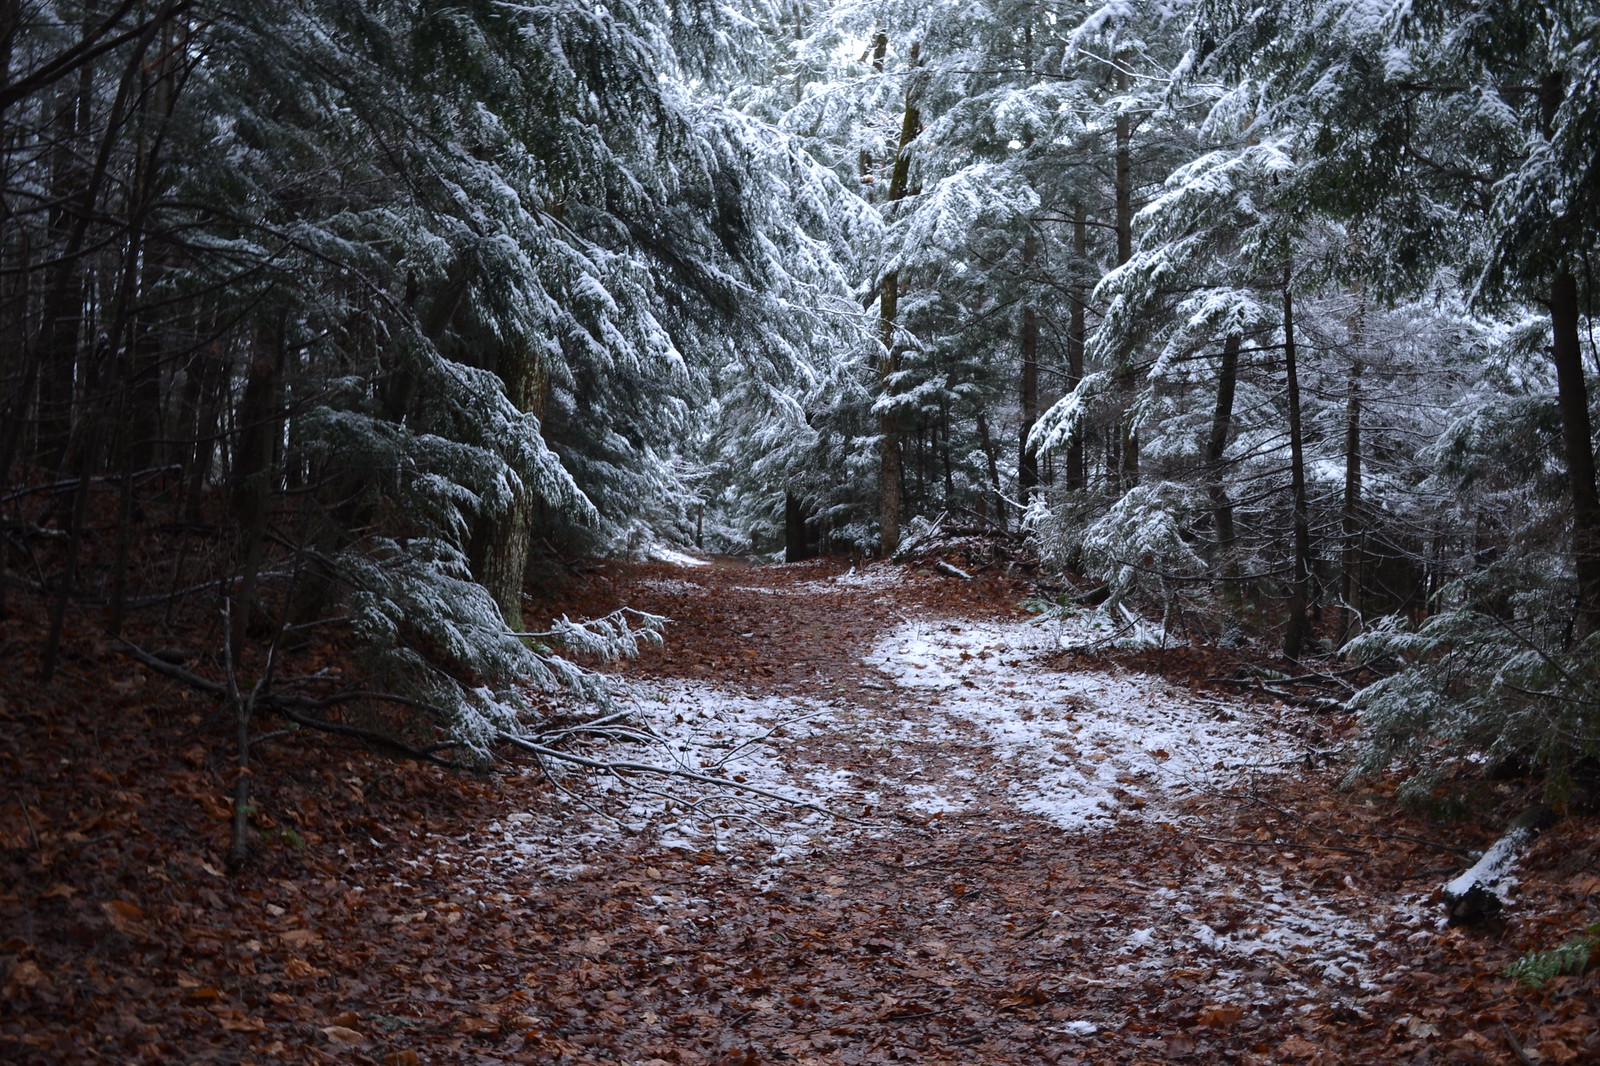 Balade en forêt après la première neige - Into the woods afer the first snowfall